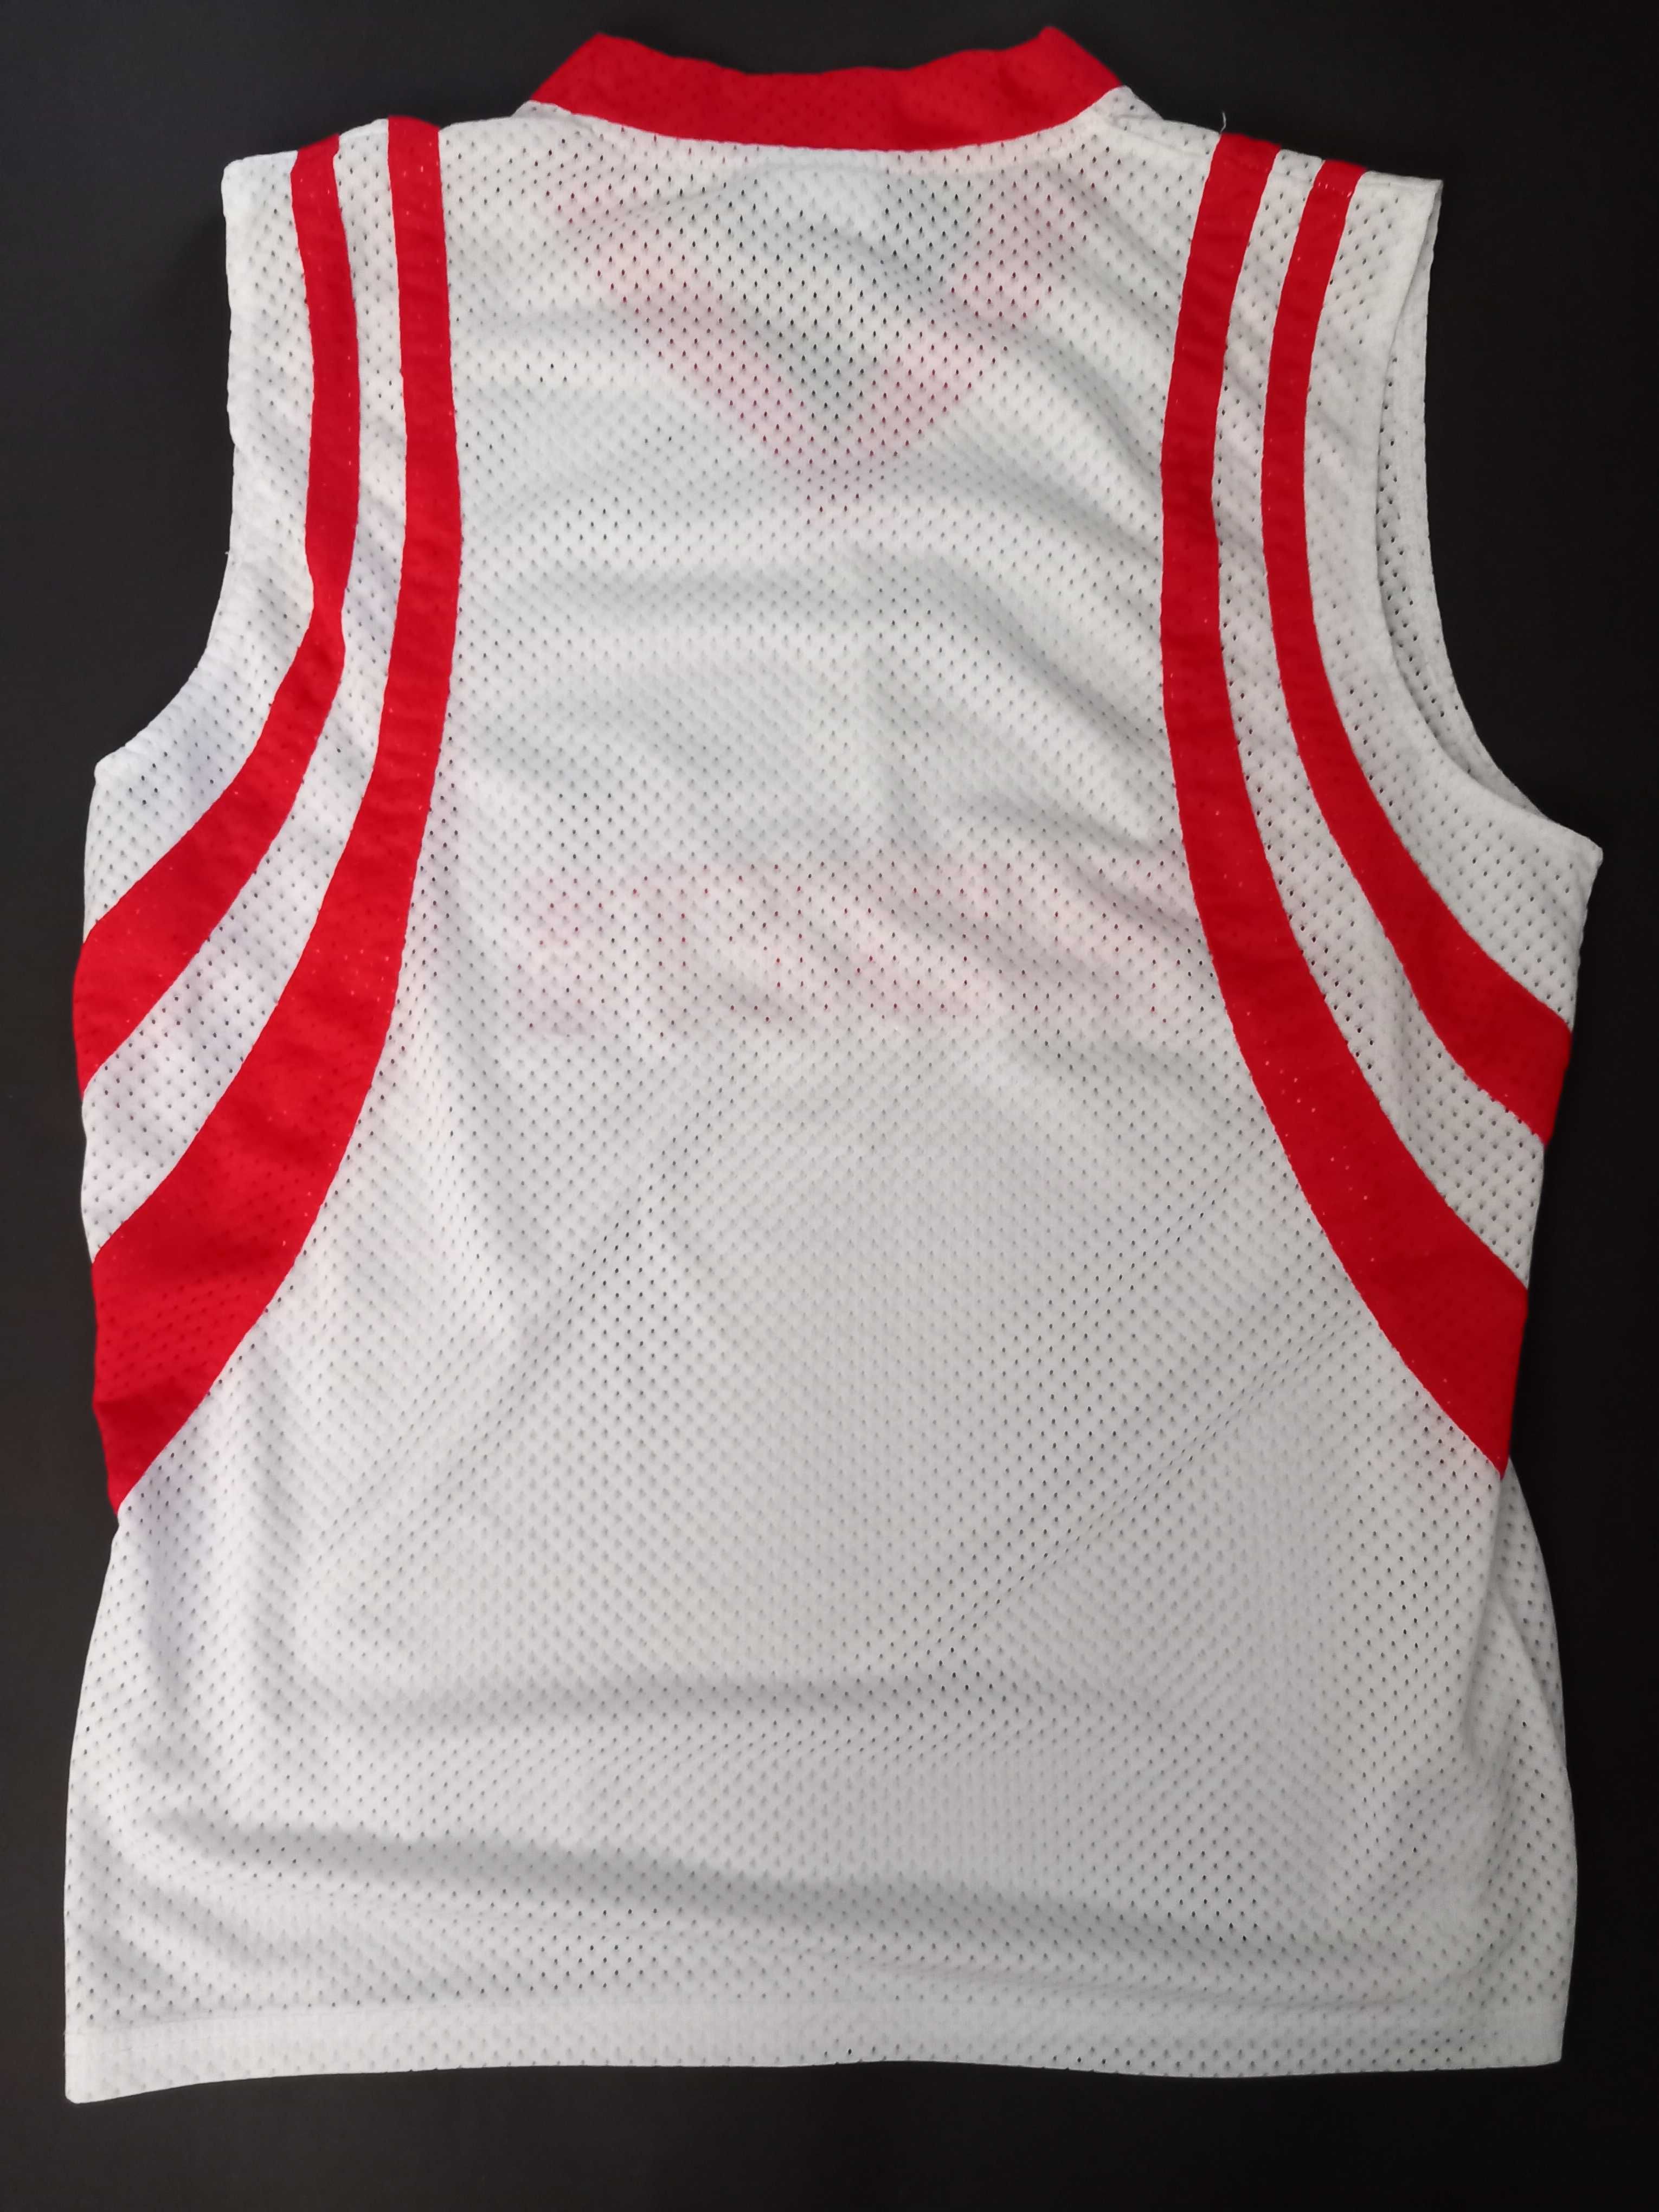 Koszulka NBA Rockets Adidas, L/XL